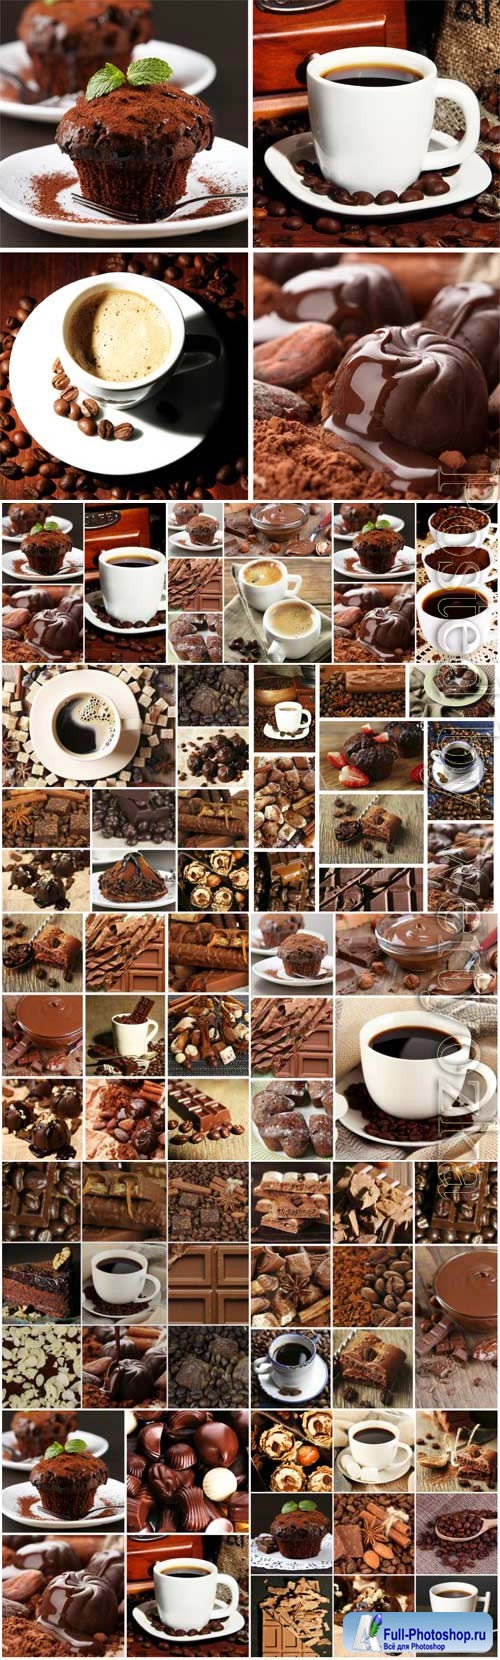 Chocolate and coffee stock photo